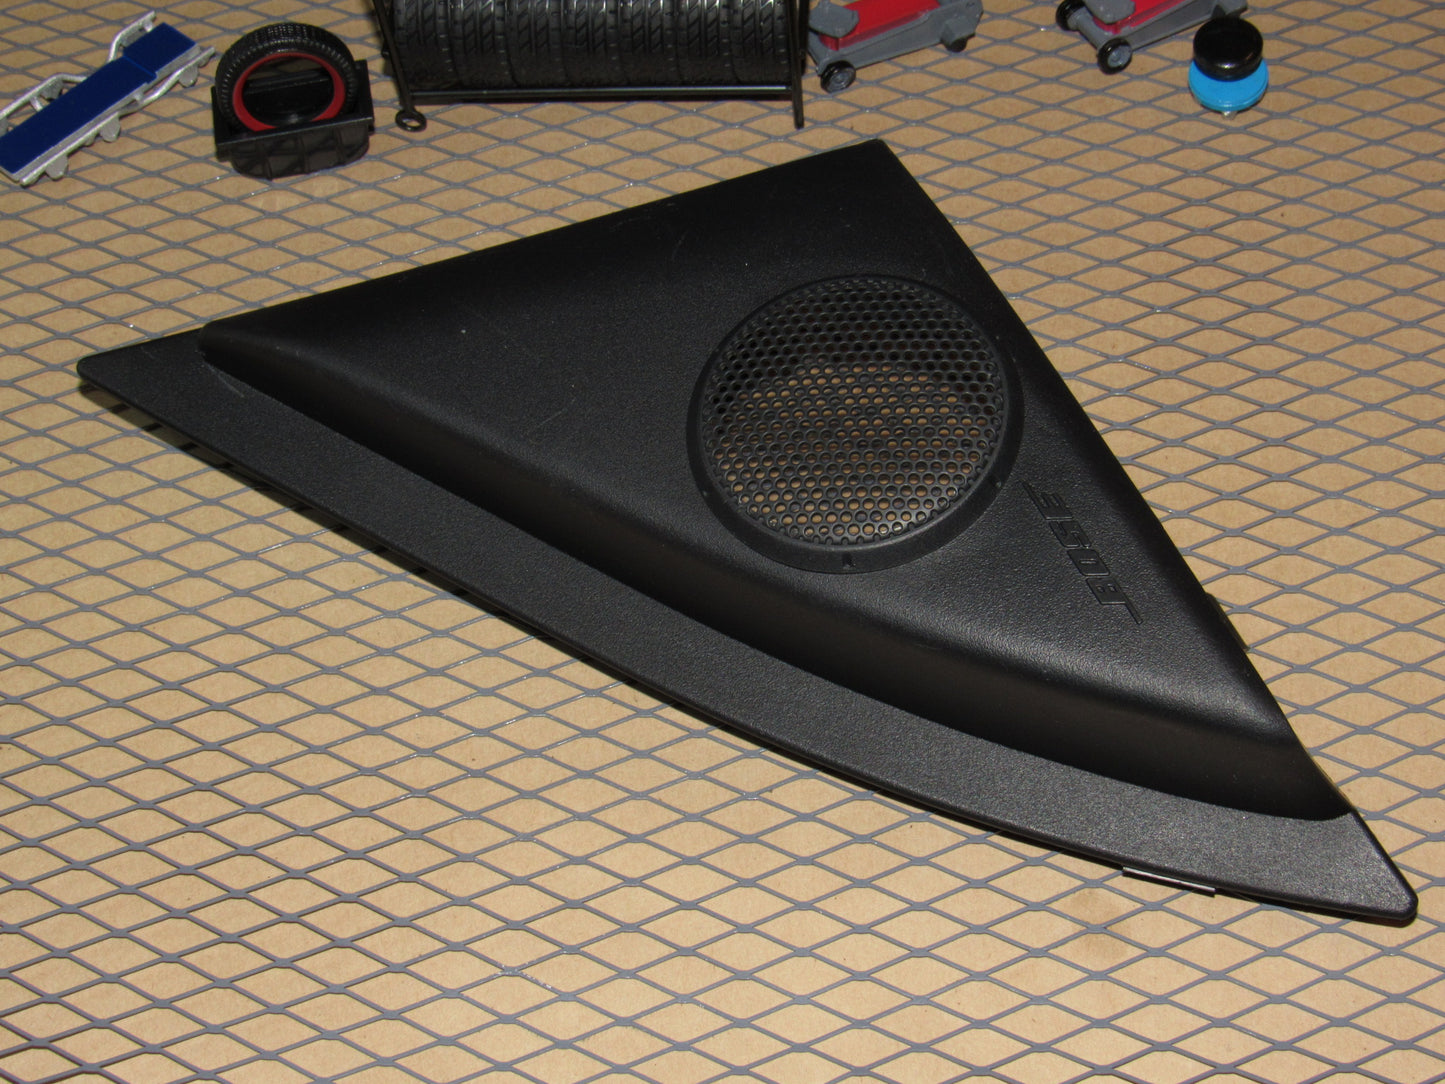 04 05 06 07 08 Mazda RX8 OEM Bose Tweeter Speaker Cover Trim - Right